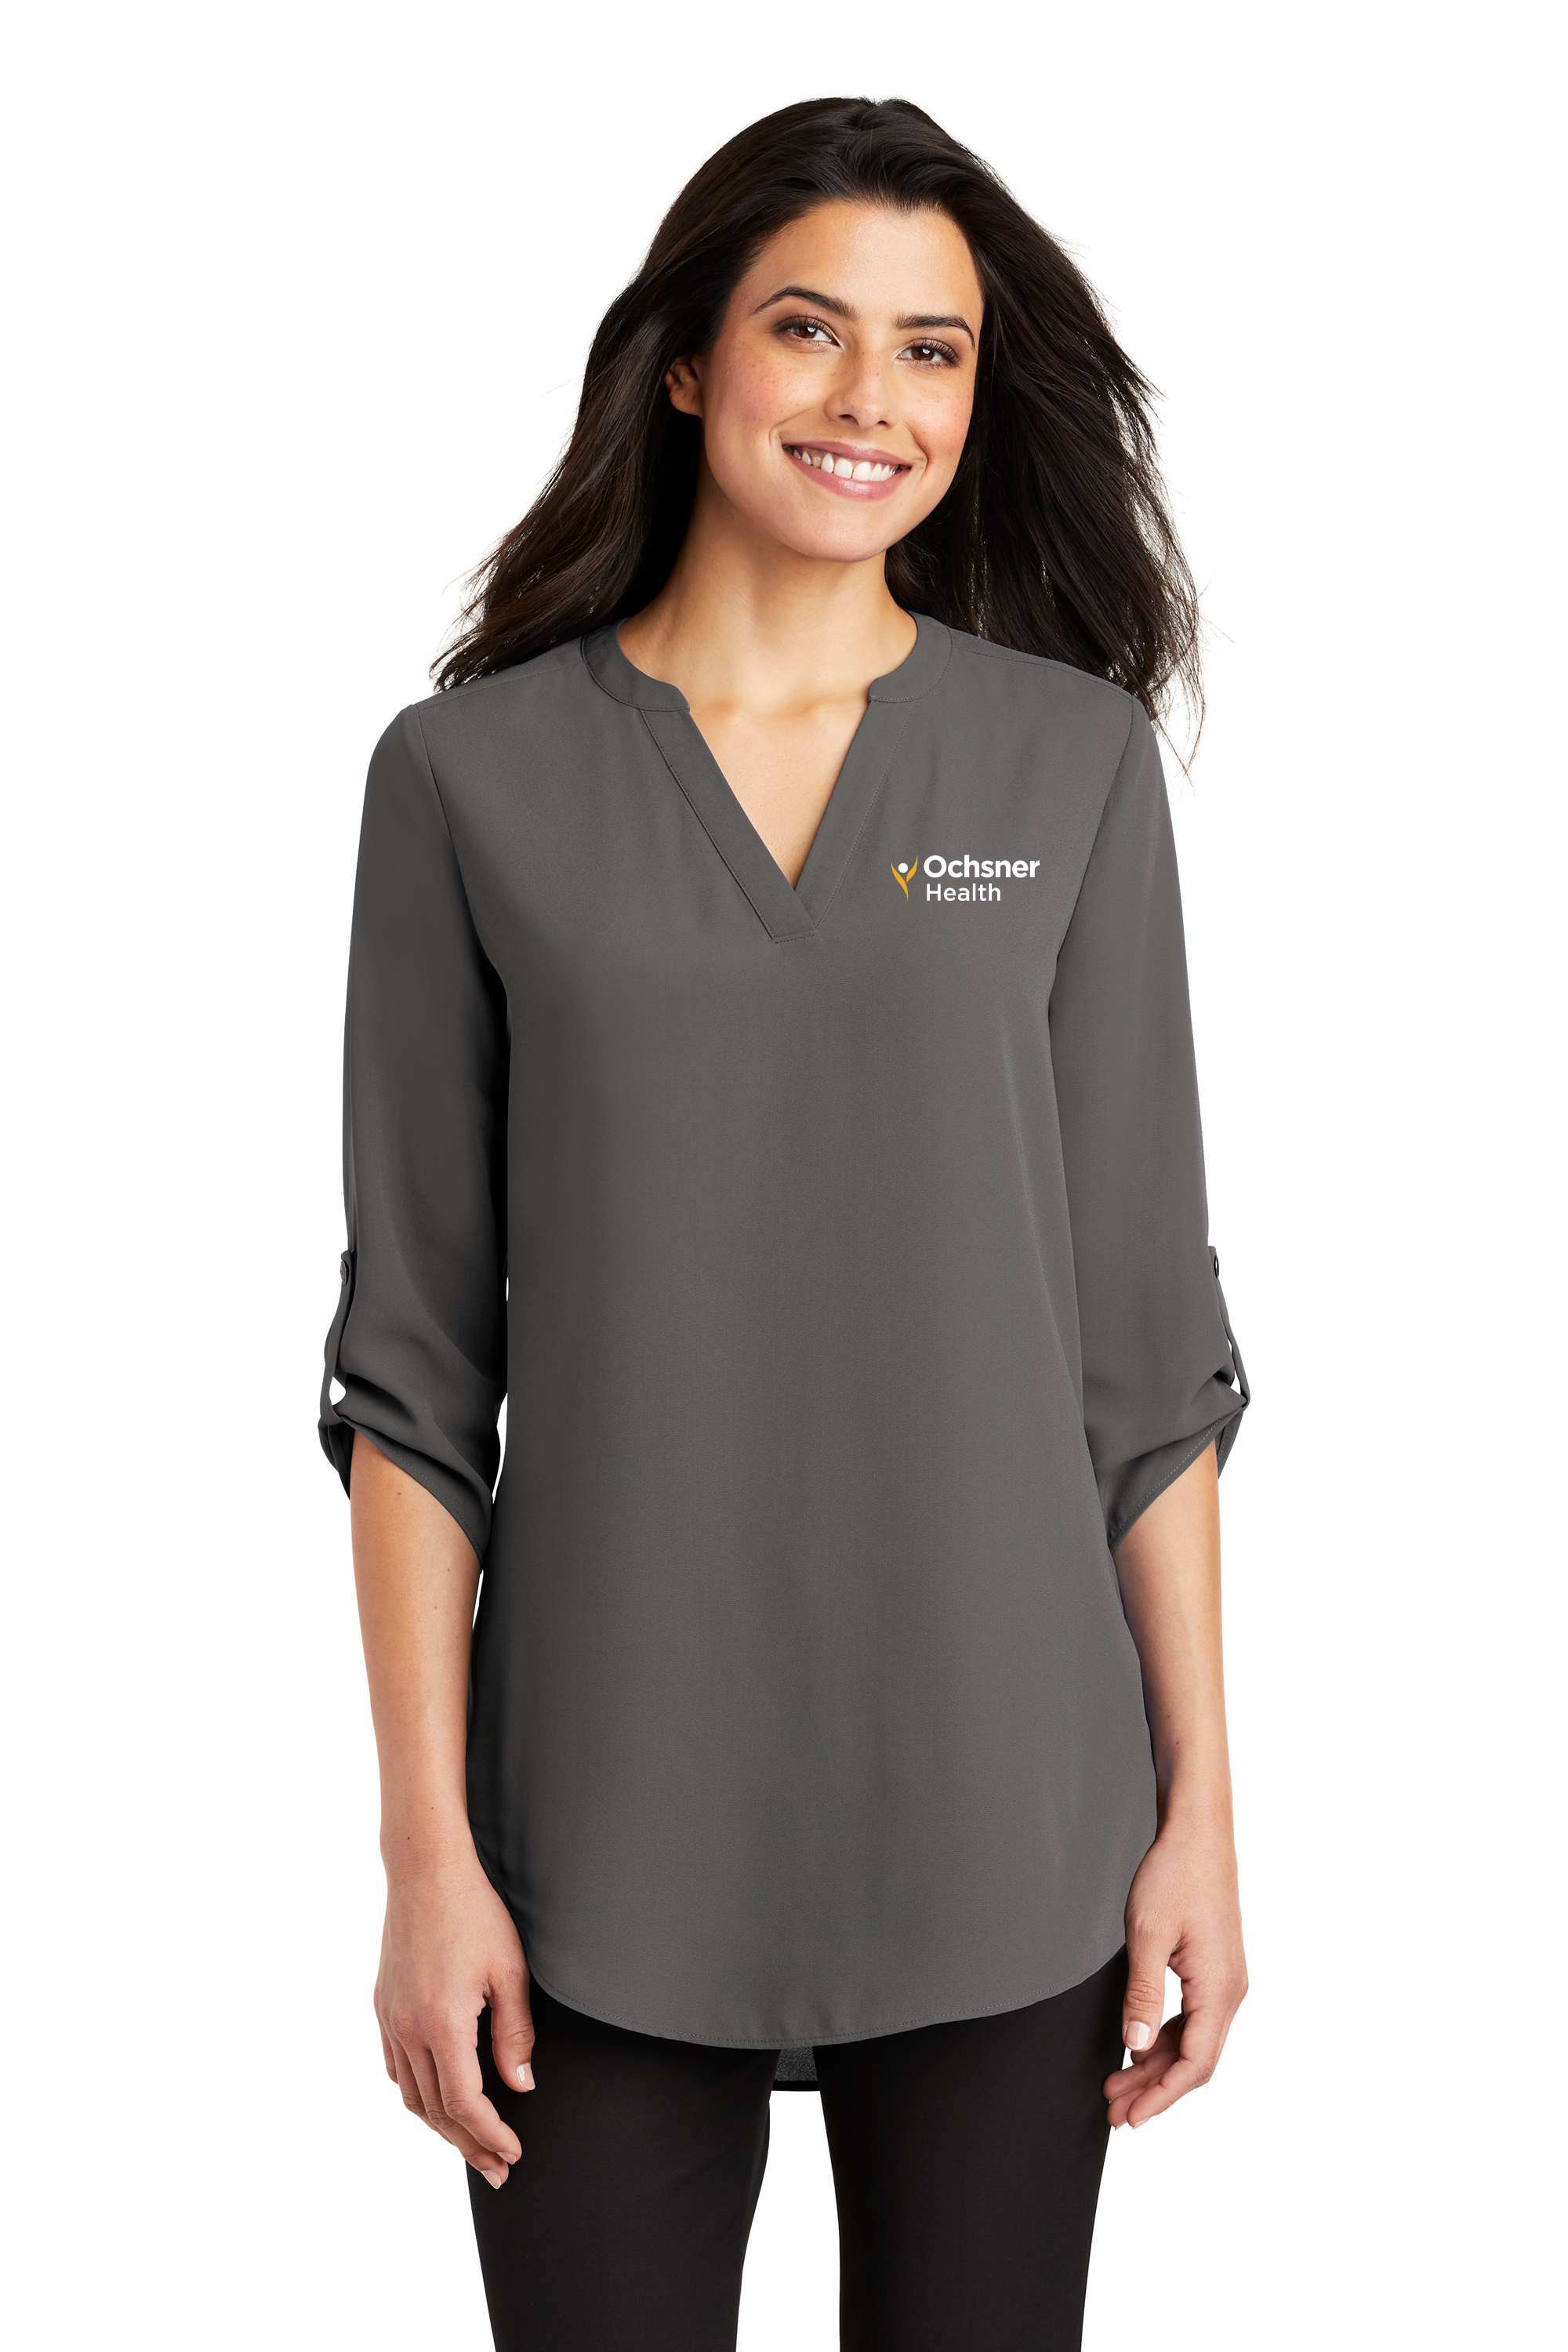 Port Authority Women's 3/4 Sleeve Tunic Blouse, Gray, large image number 1